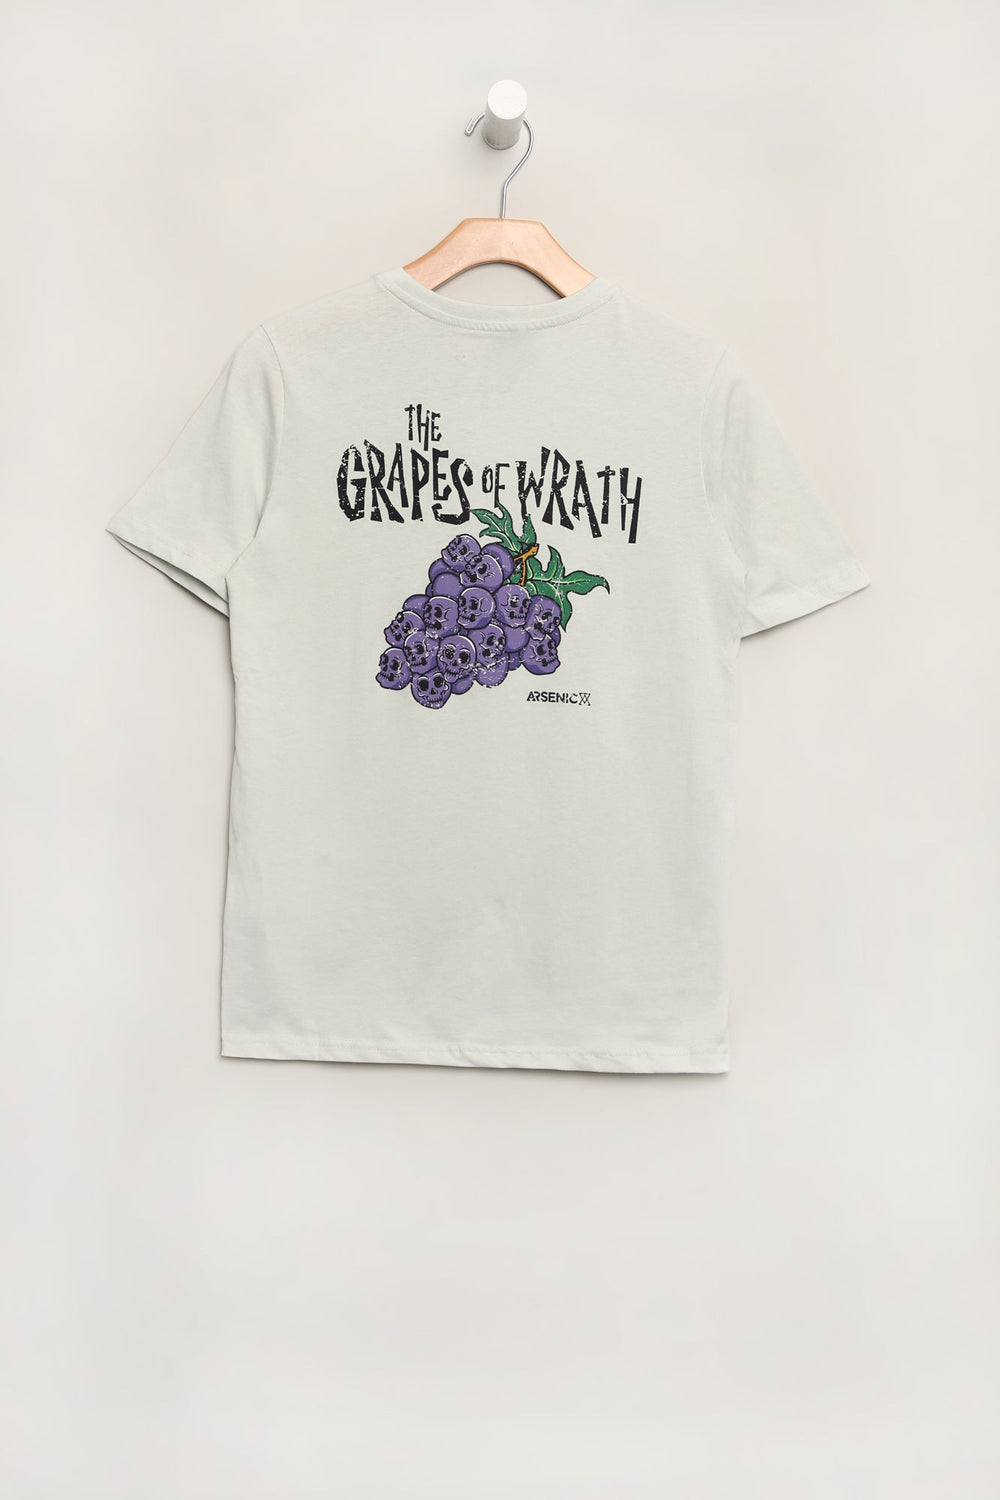 Arsenic Youth Fruit Skulls T-Shirt Arsenic Youth Fruit Skulls T-Shirt